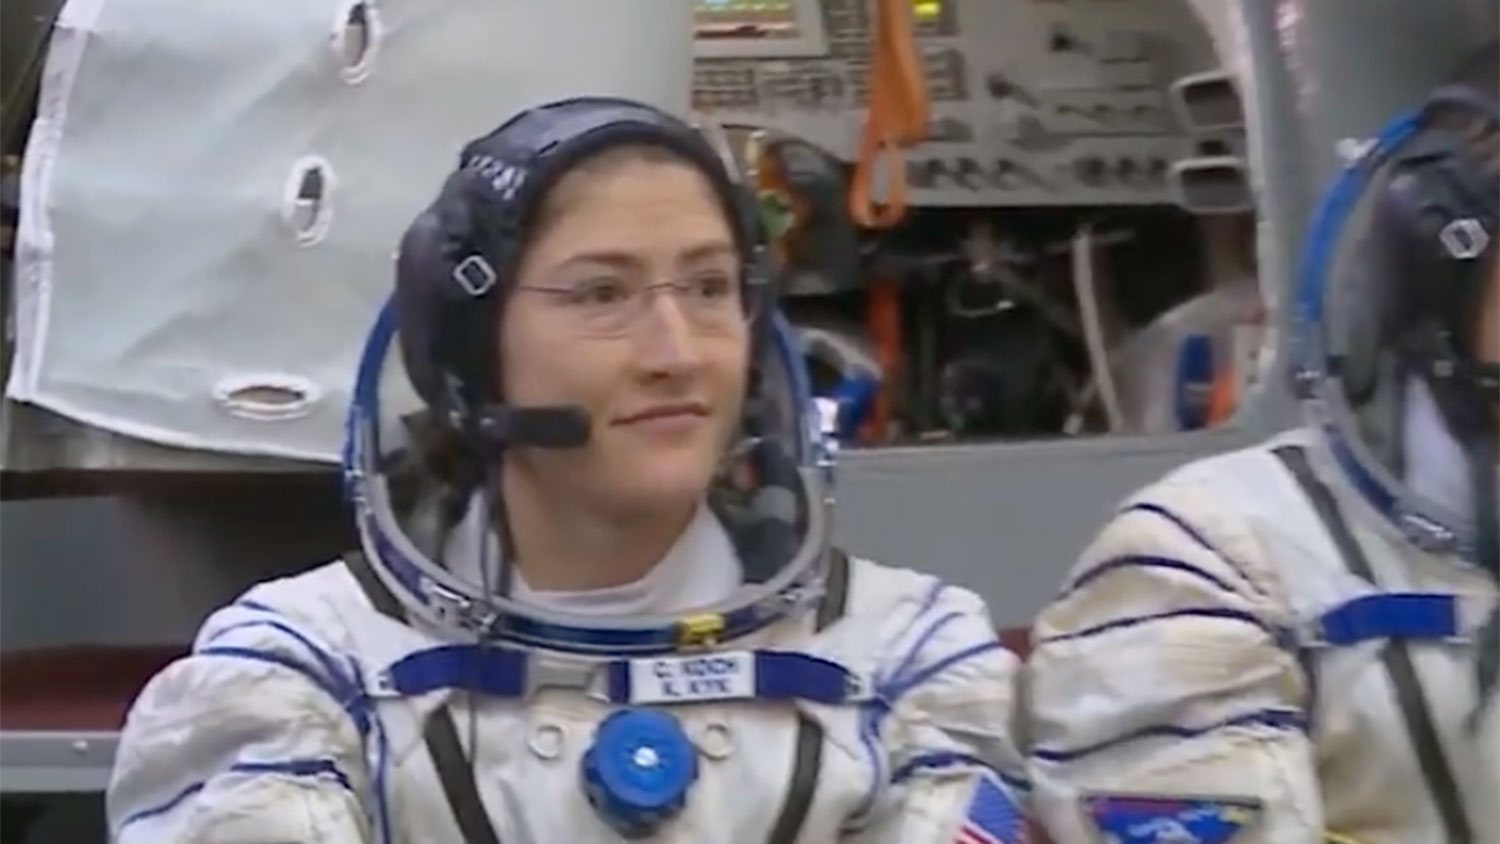 NC State Alumna和Astronaut Christina Koch